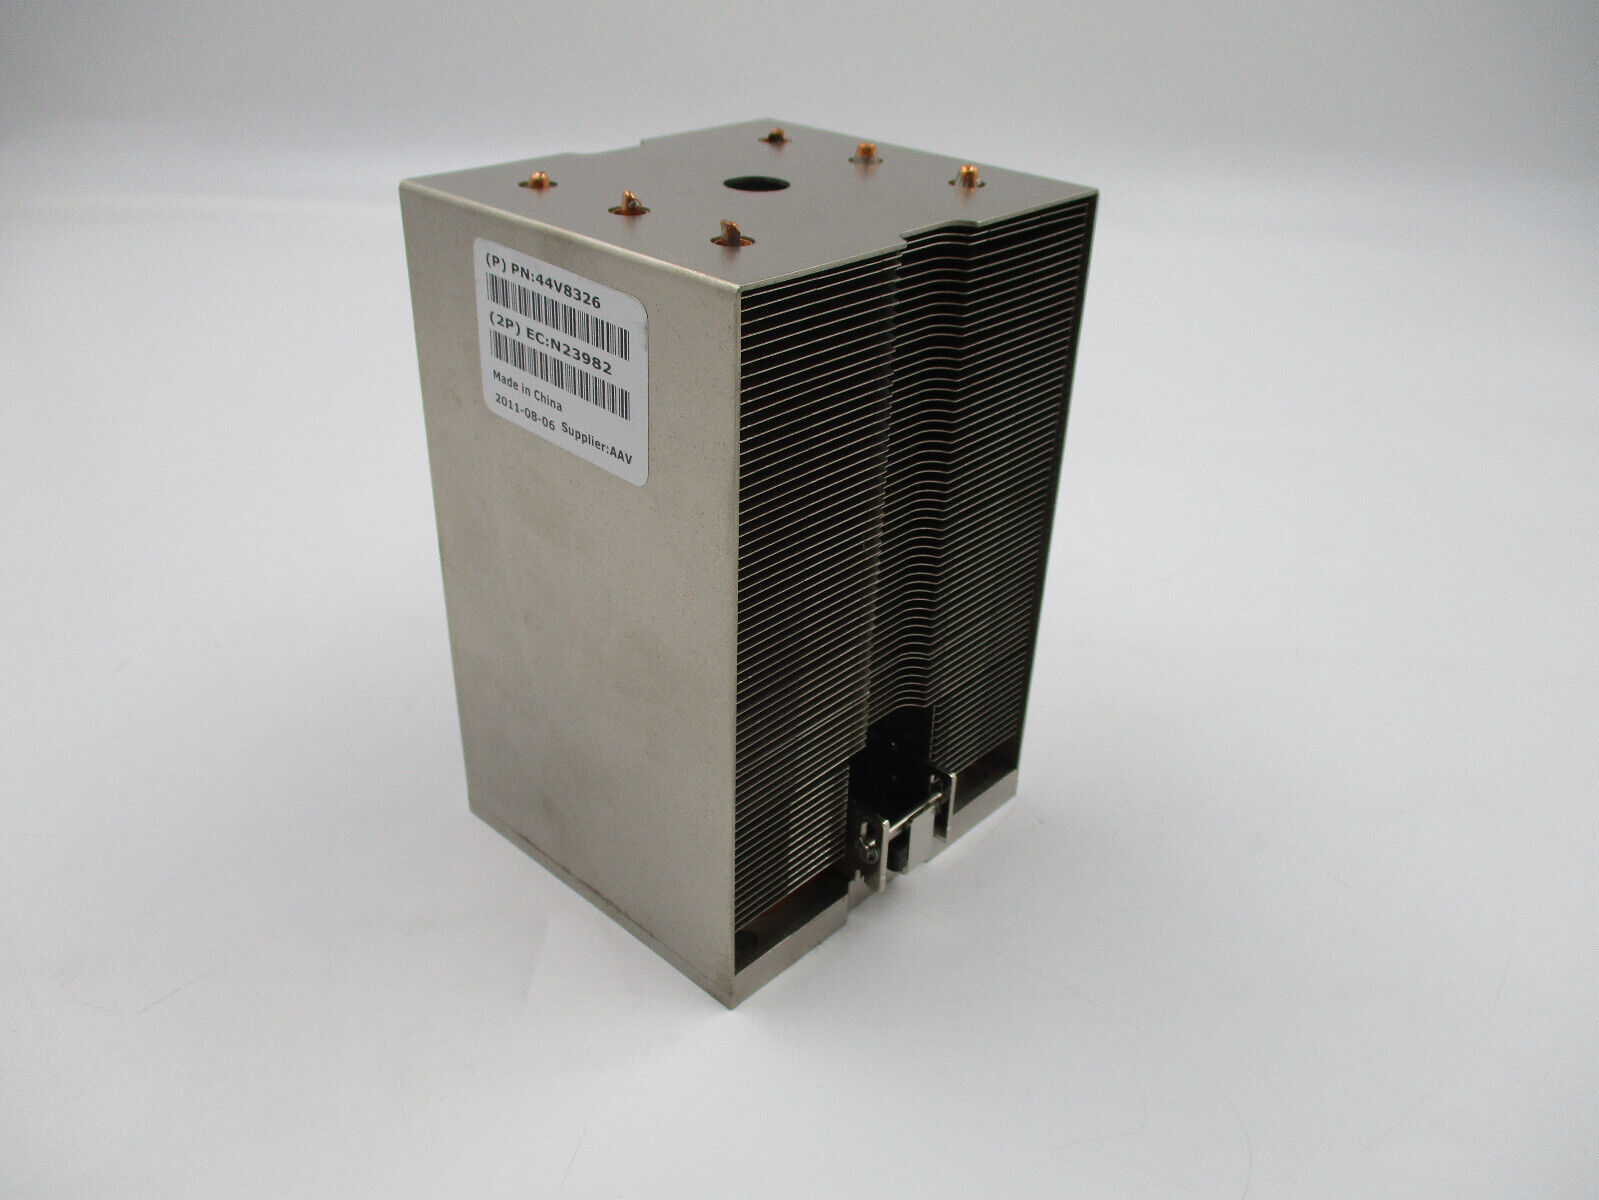 IBM POWER7 8202 Series Server CPU Cooling Heatsink P/N: 44V8326 Tested Working